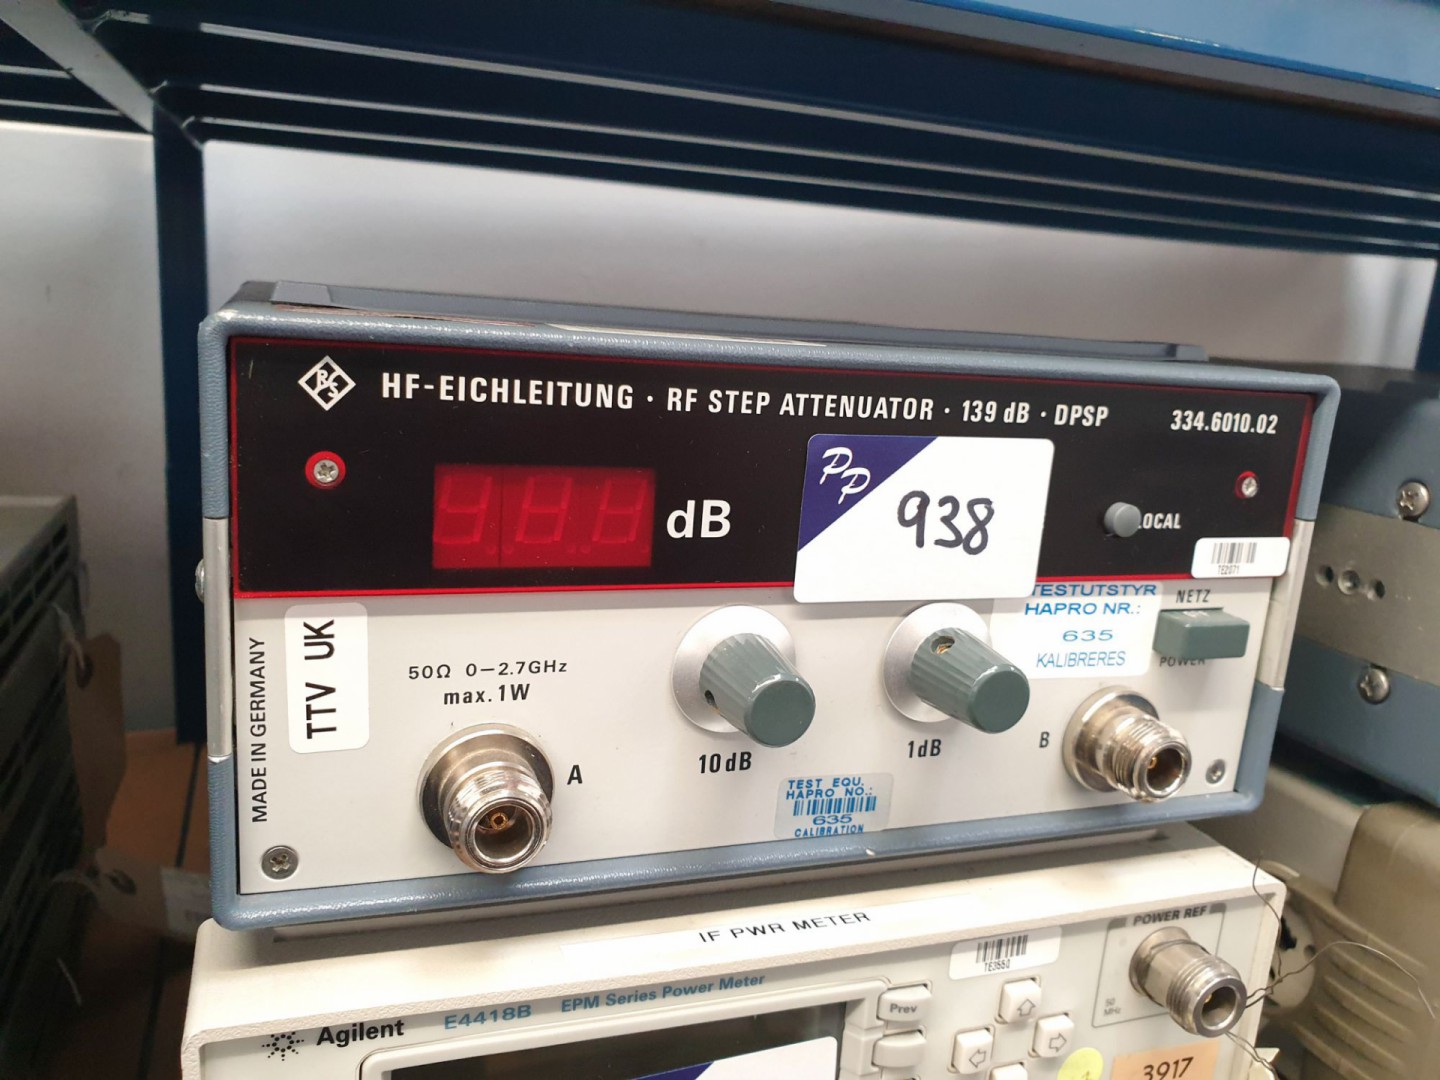 Rohde & Schwarz DPSP RF step attenuator